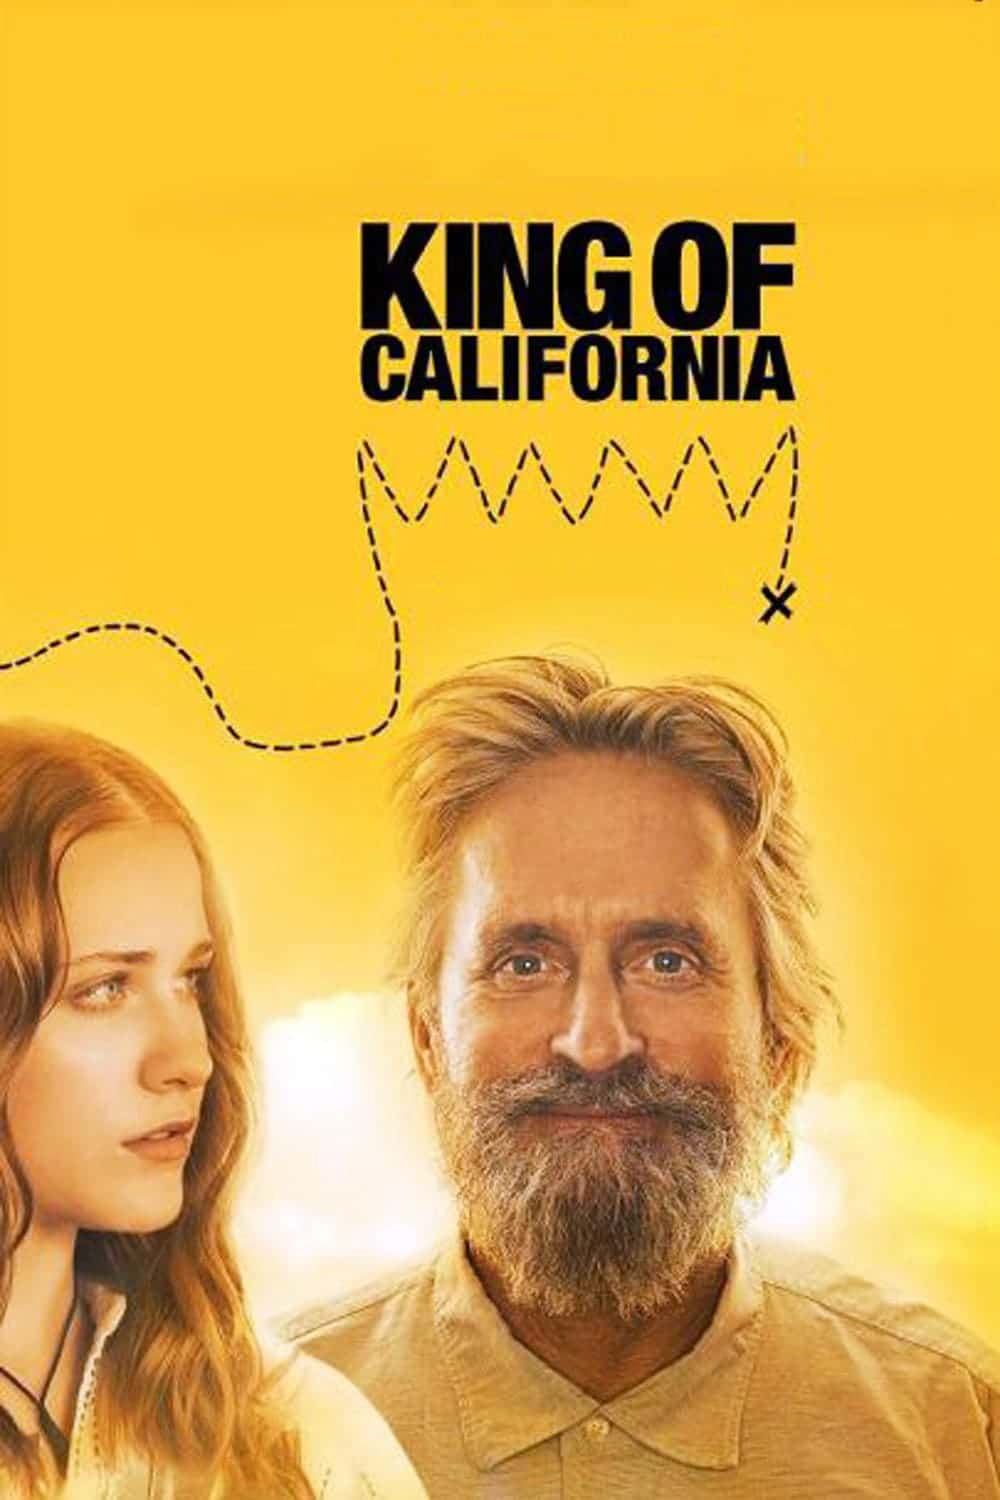 Plakat von "King of California"